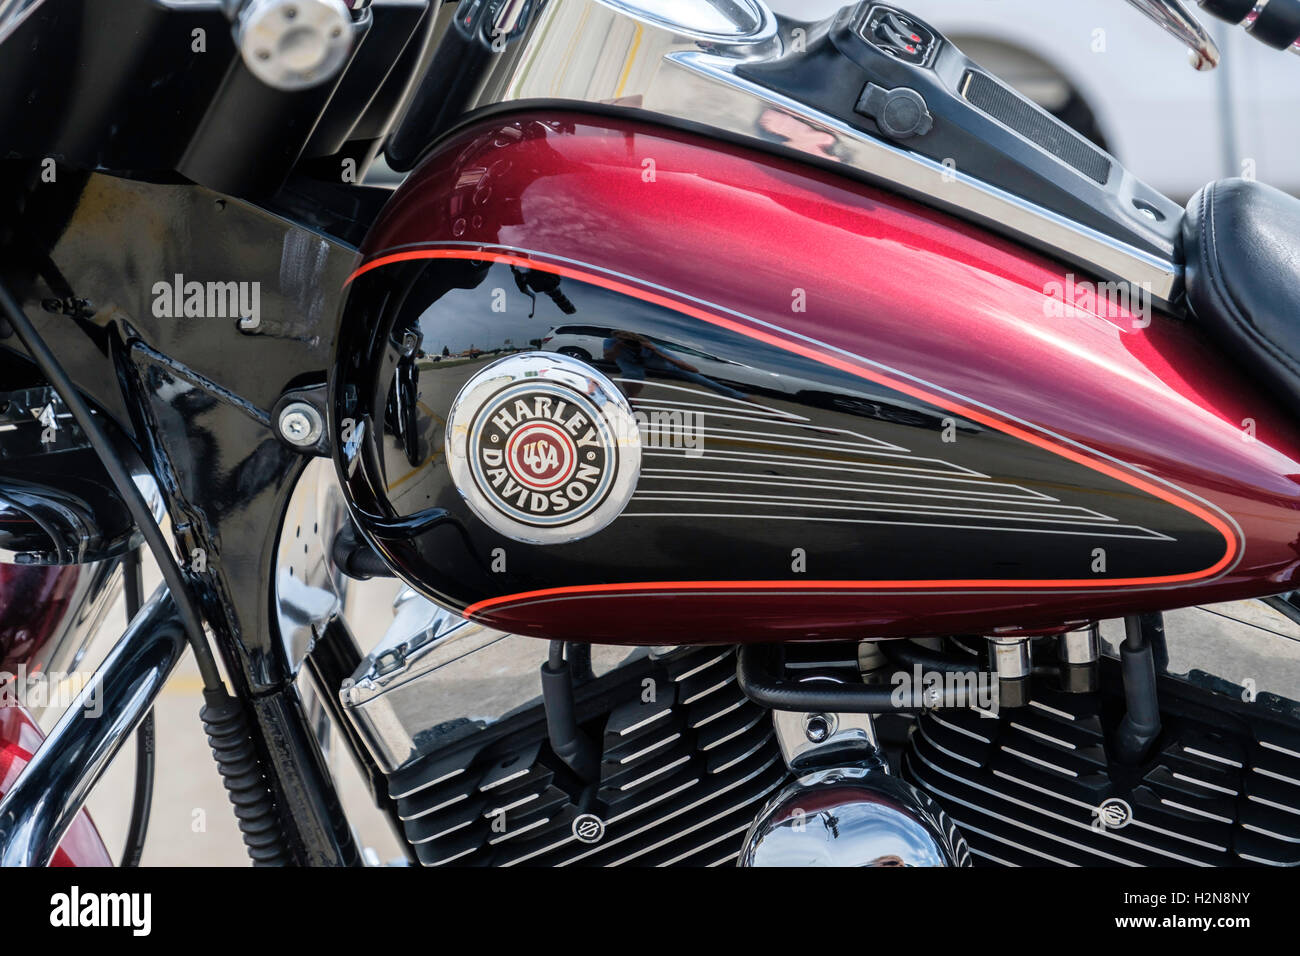 Un rouge profond Harley Davidson Ultra Classic châssis moto, gros plan. Oklahoma City, Oklahoma, USA. Banque D'Images